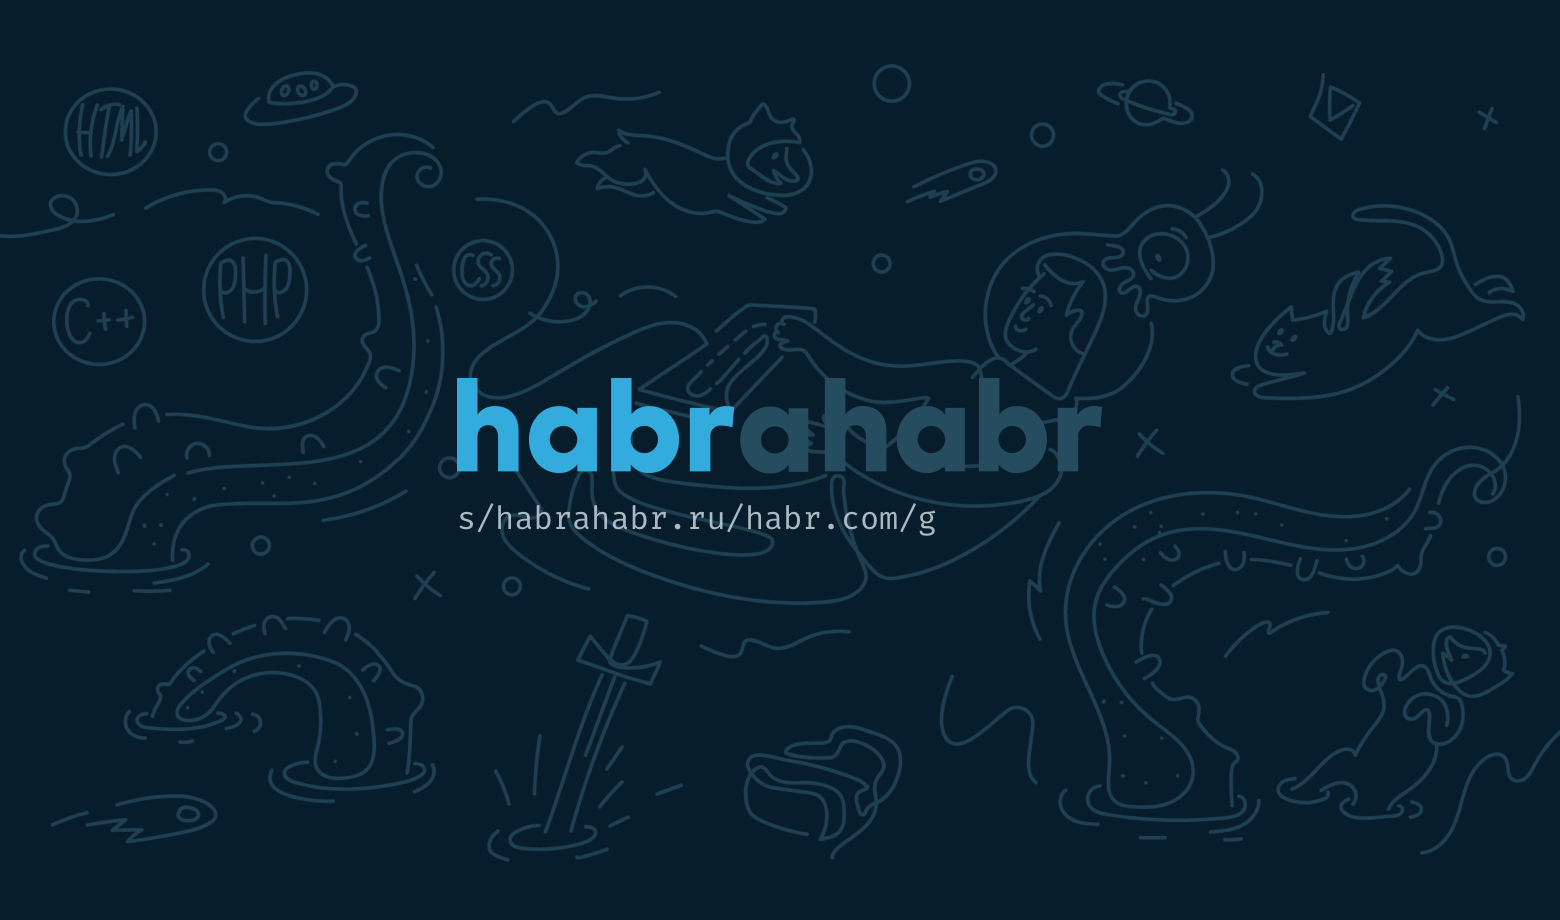 habrahabr.ru → habr.com - 1